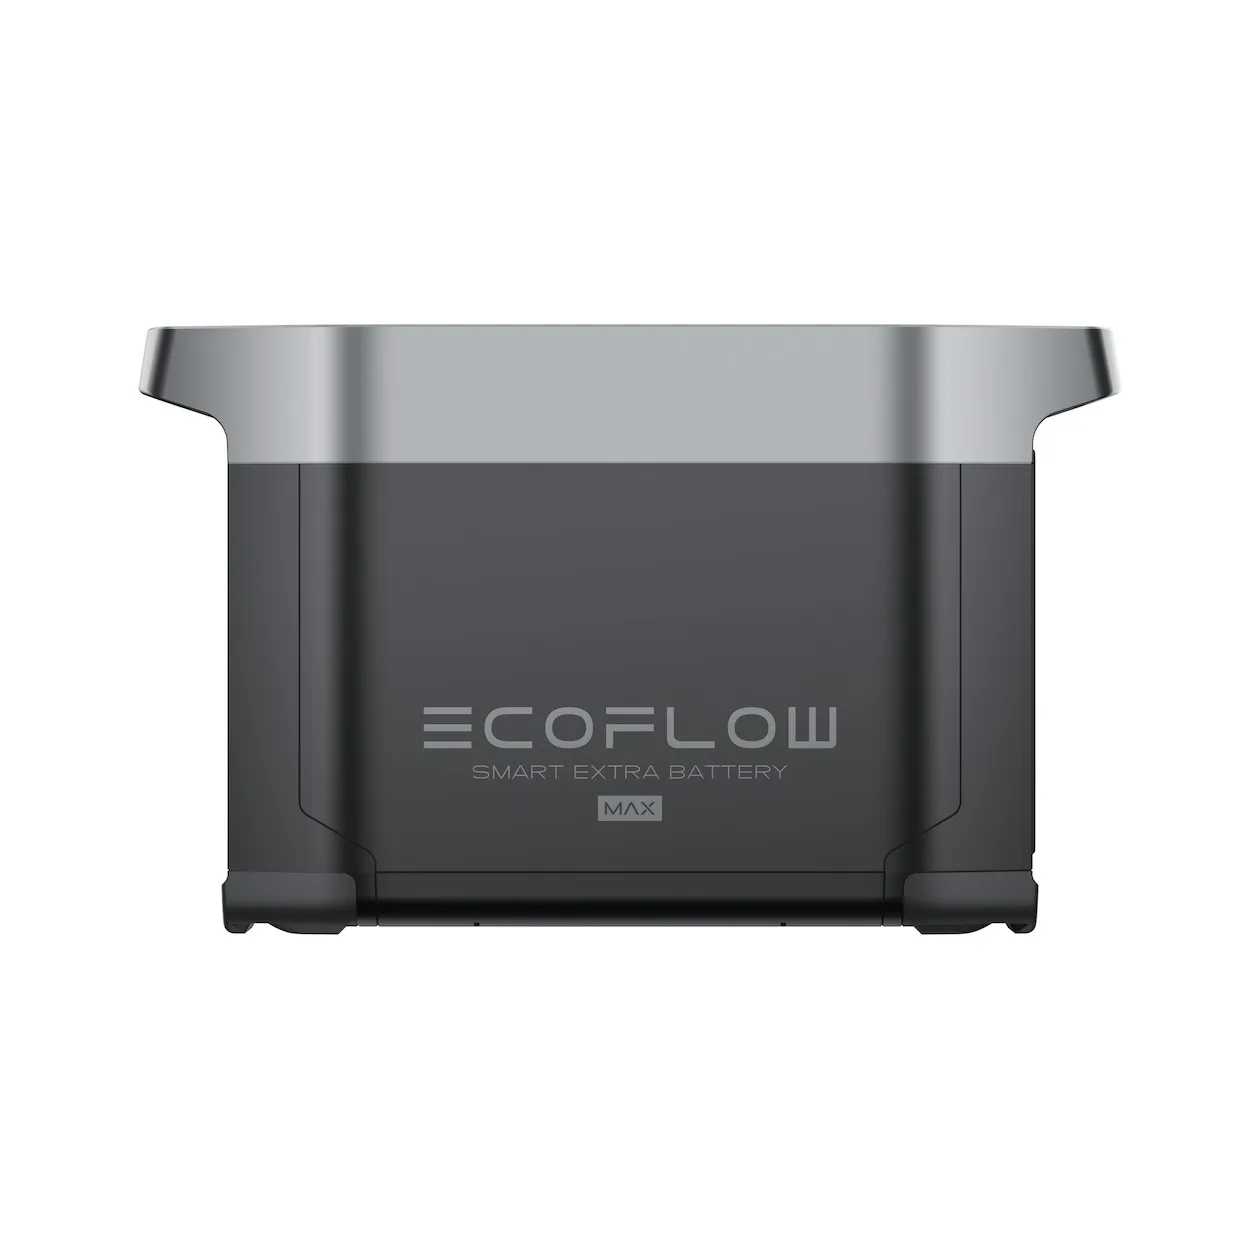 Ecoflow DELTA 2 Max Extra Battery